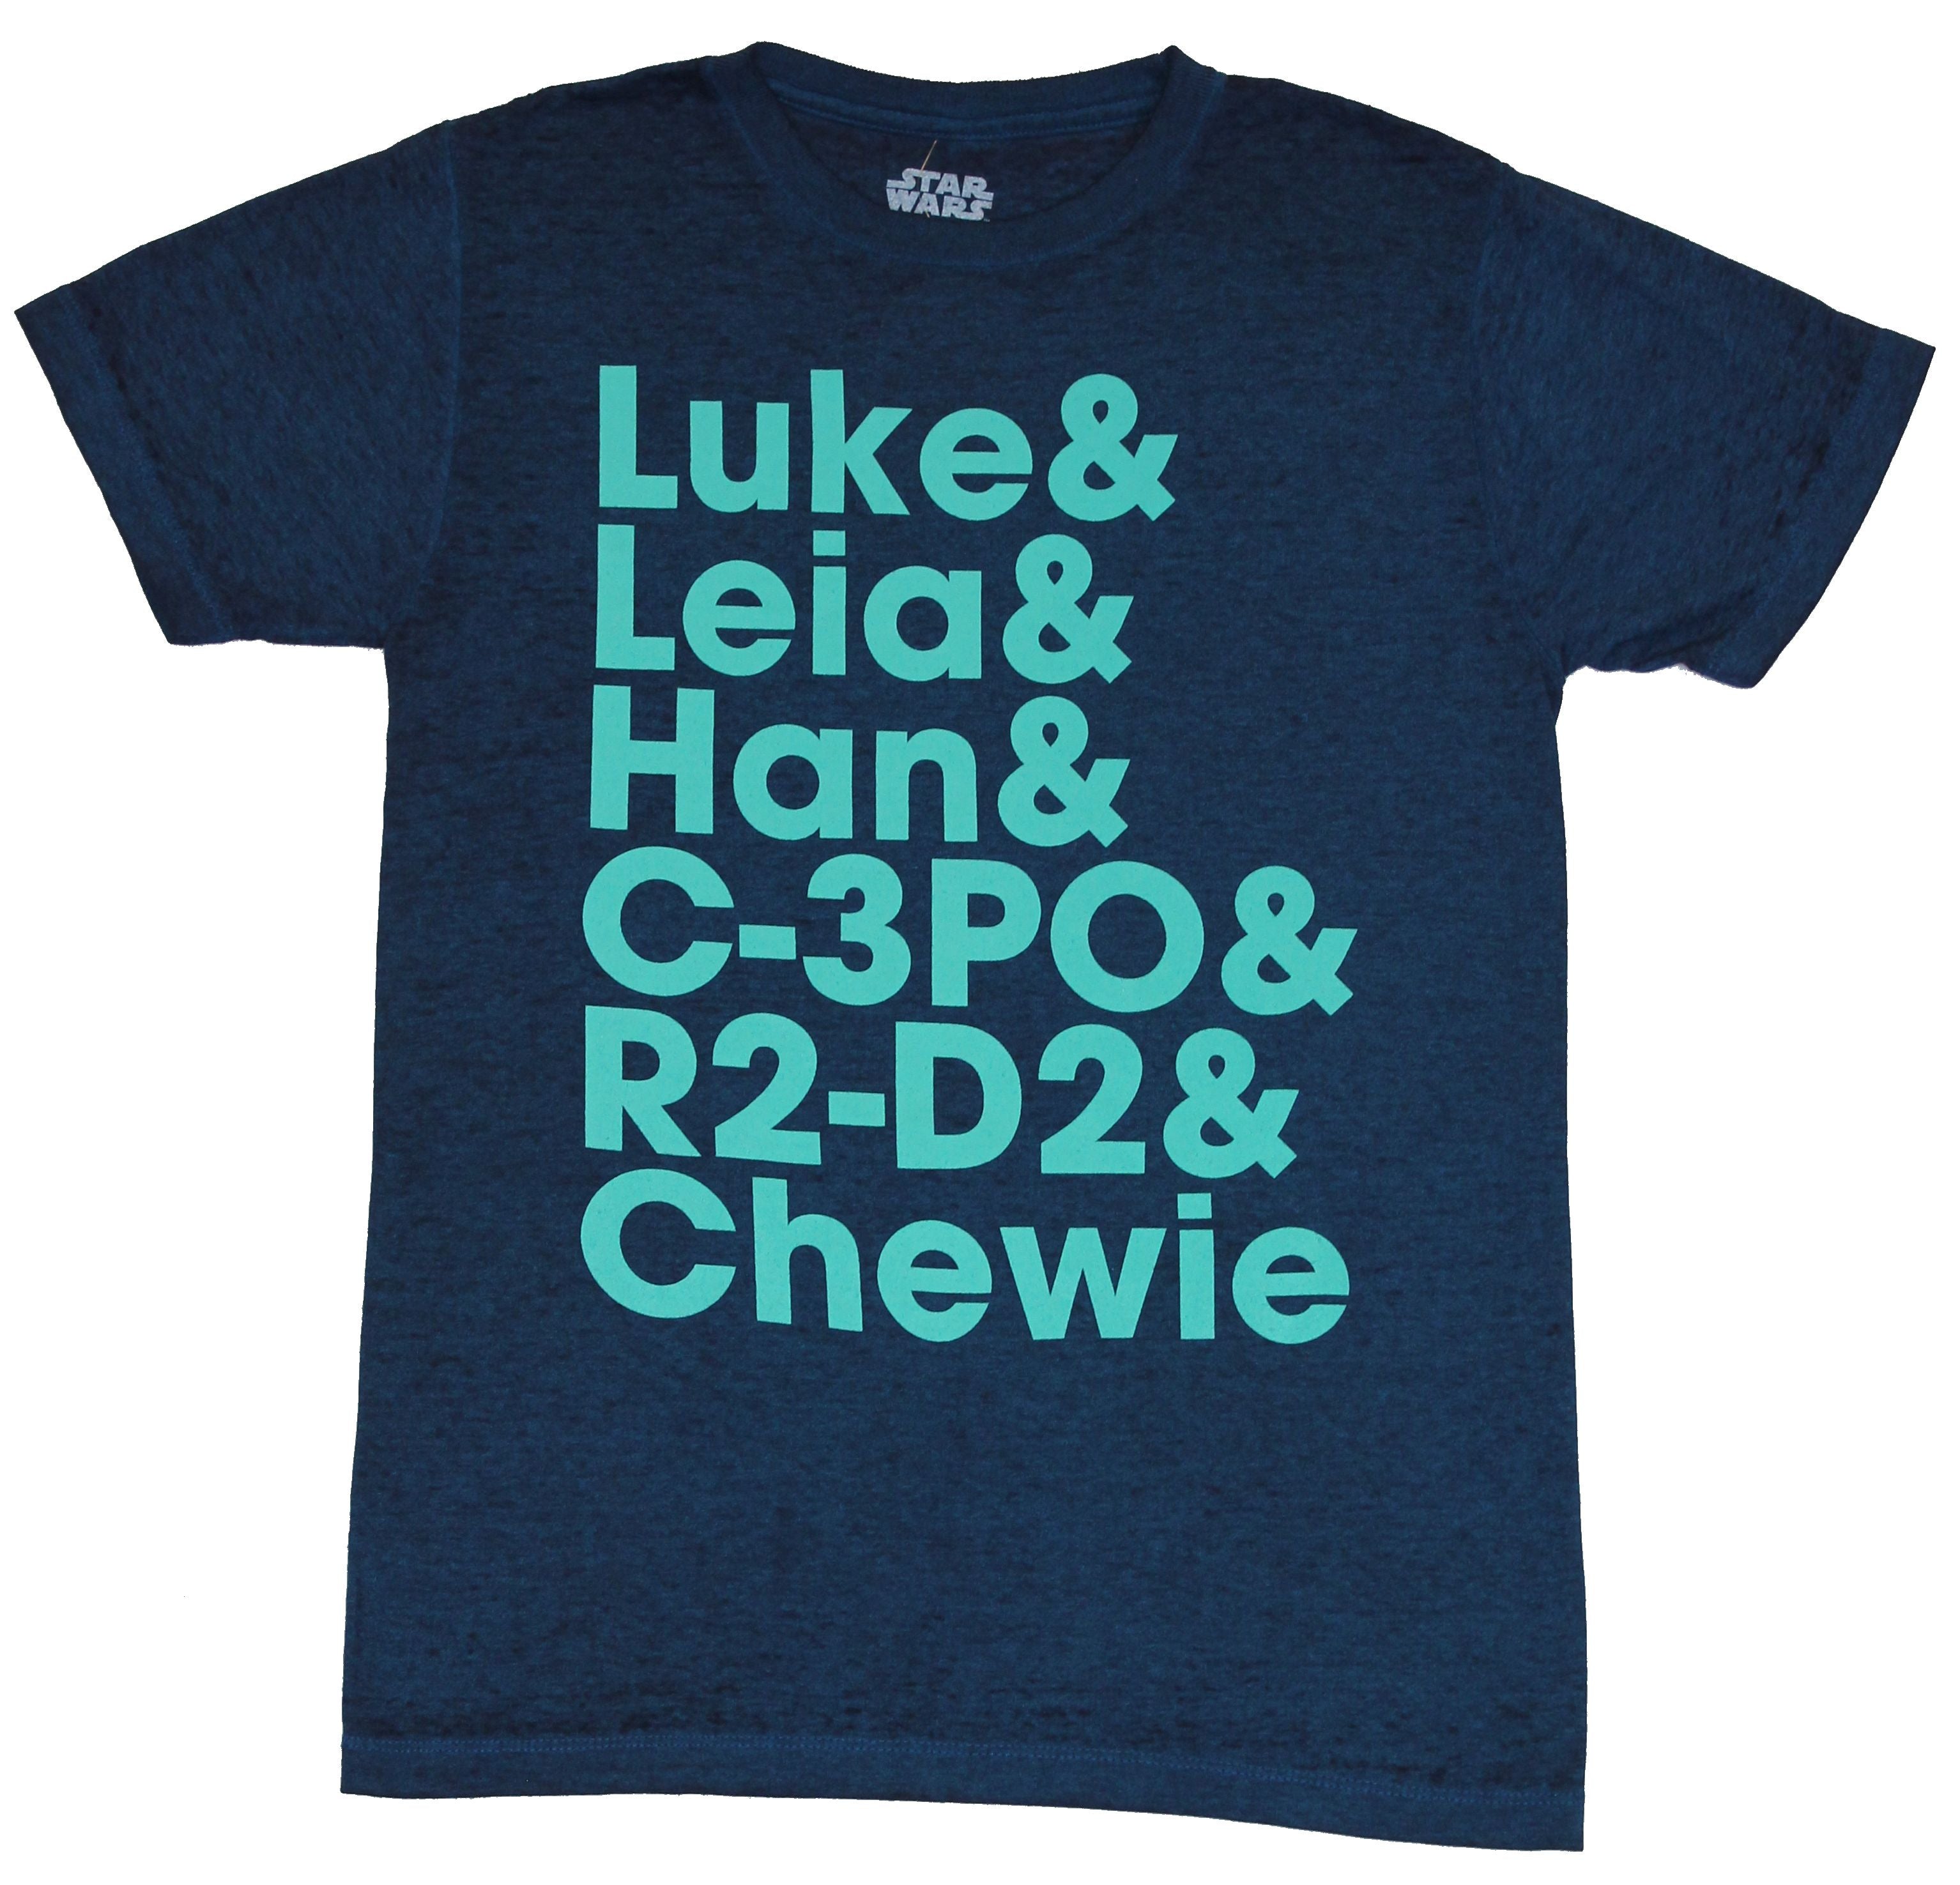 Star Wars Mens T-Shirt - Luke, Leia, Han, C-3PO, R2-D2, Chewie Names Written